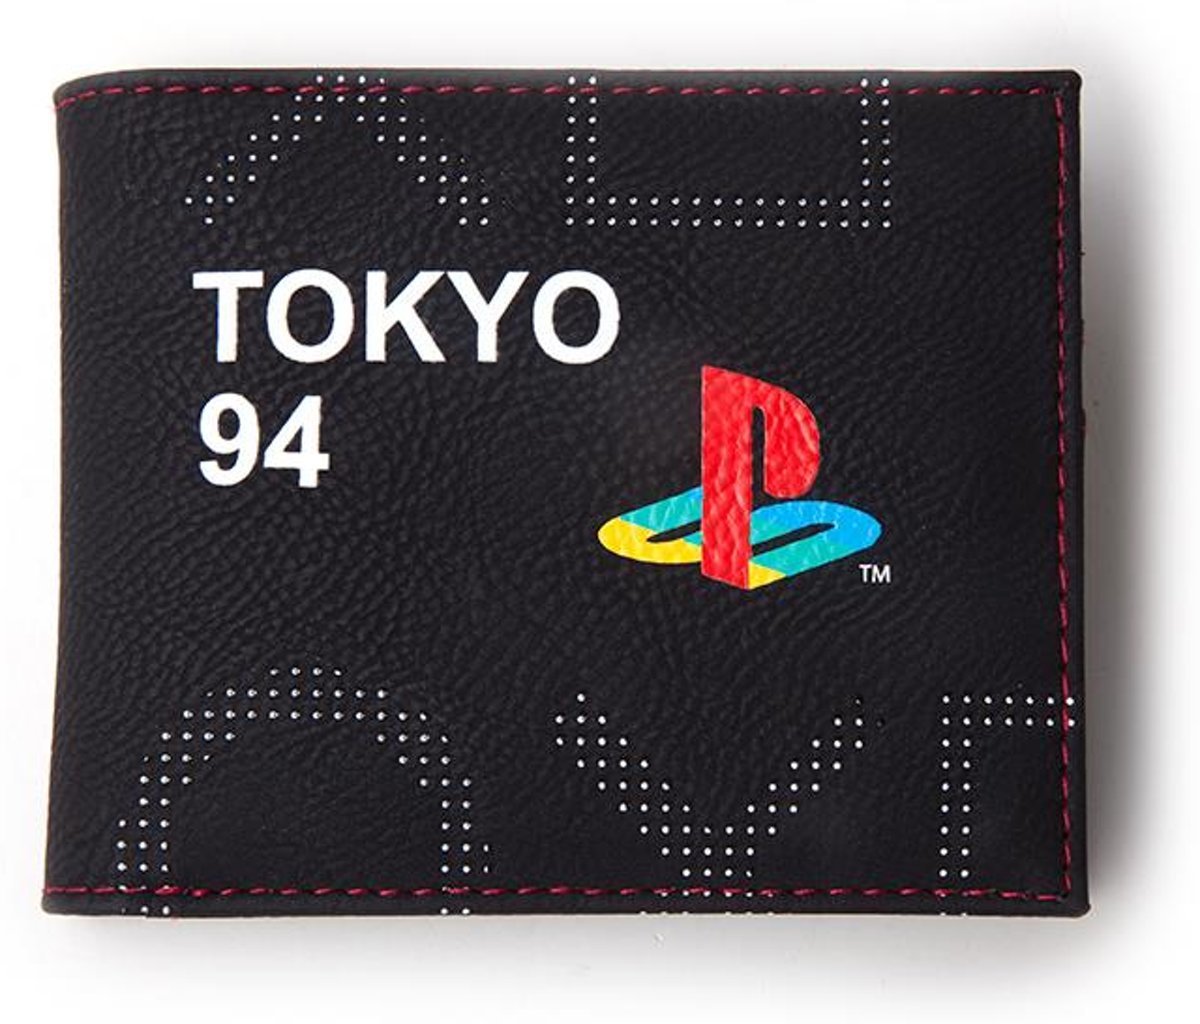 Sony - Playstation Mens Bifold Wallet